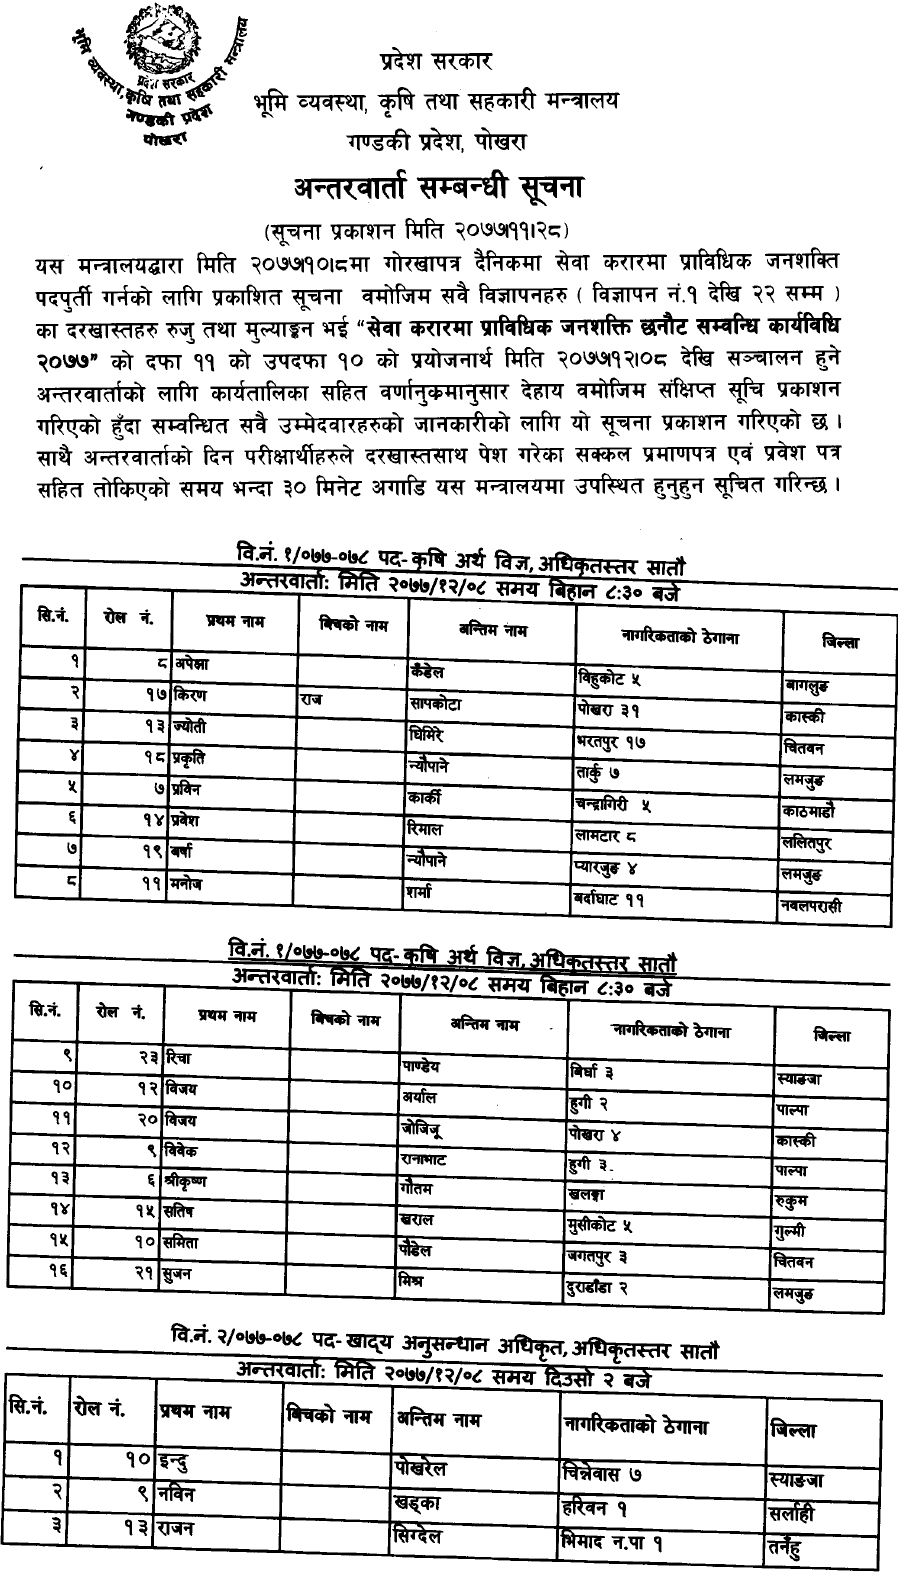 MOLMAC Gandaki Pradesh Short Listing and Interview Notice